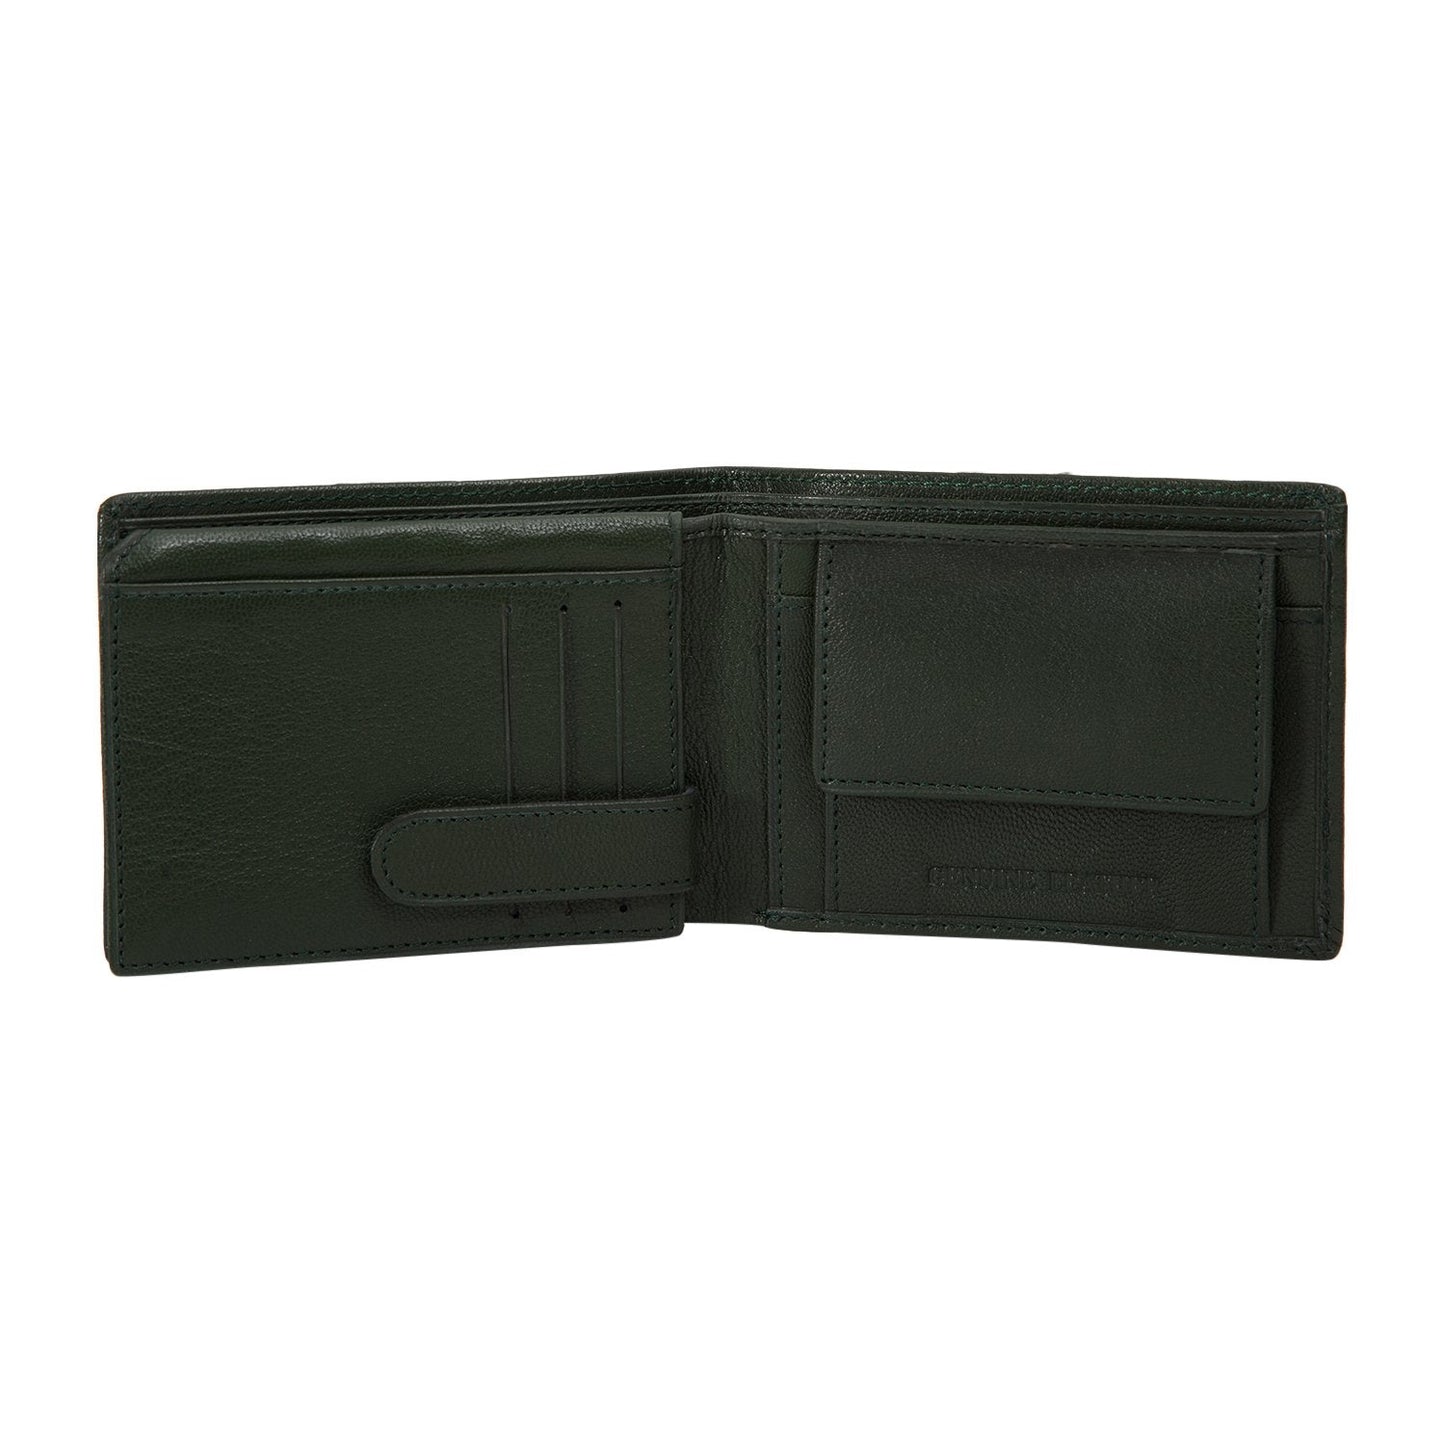 Olive Colour Bi-Fold Italian Leather Slim Wallet (7 Card Slot + 2 Hidden Compartment + 1 ID Slot + Coin Pocket + Cash Compartment)